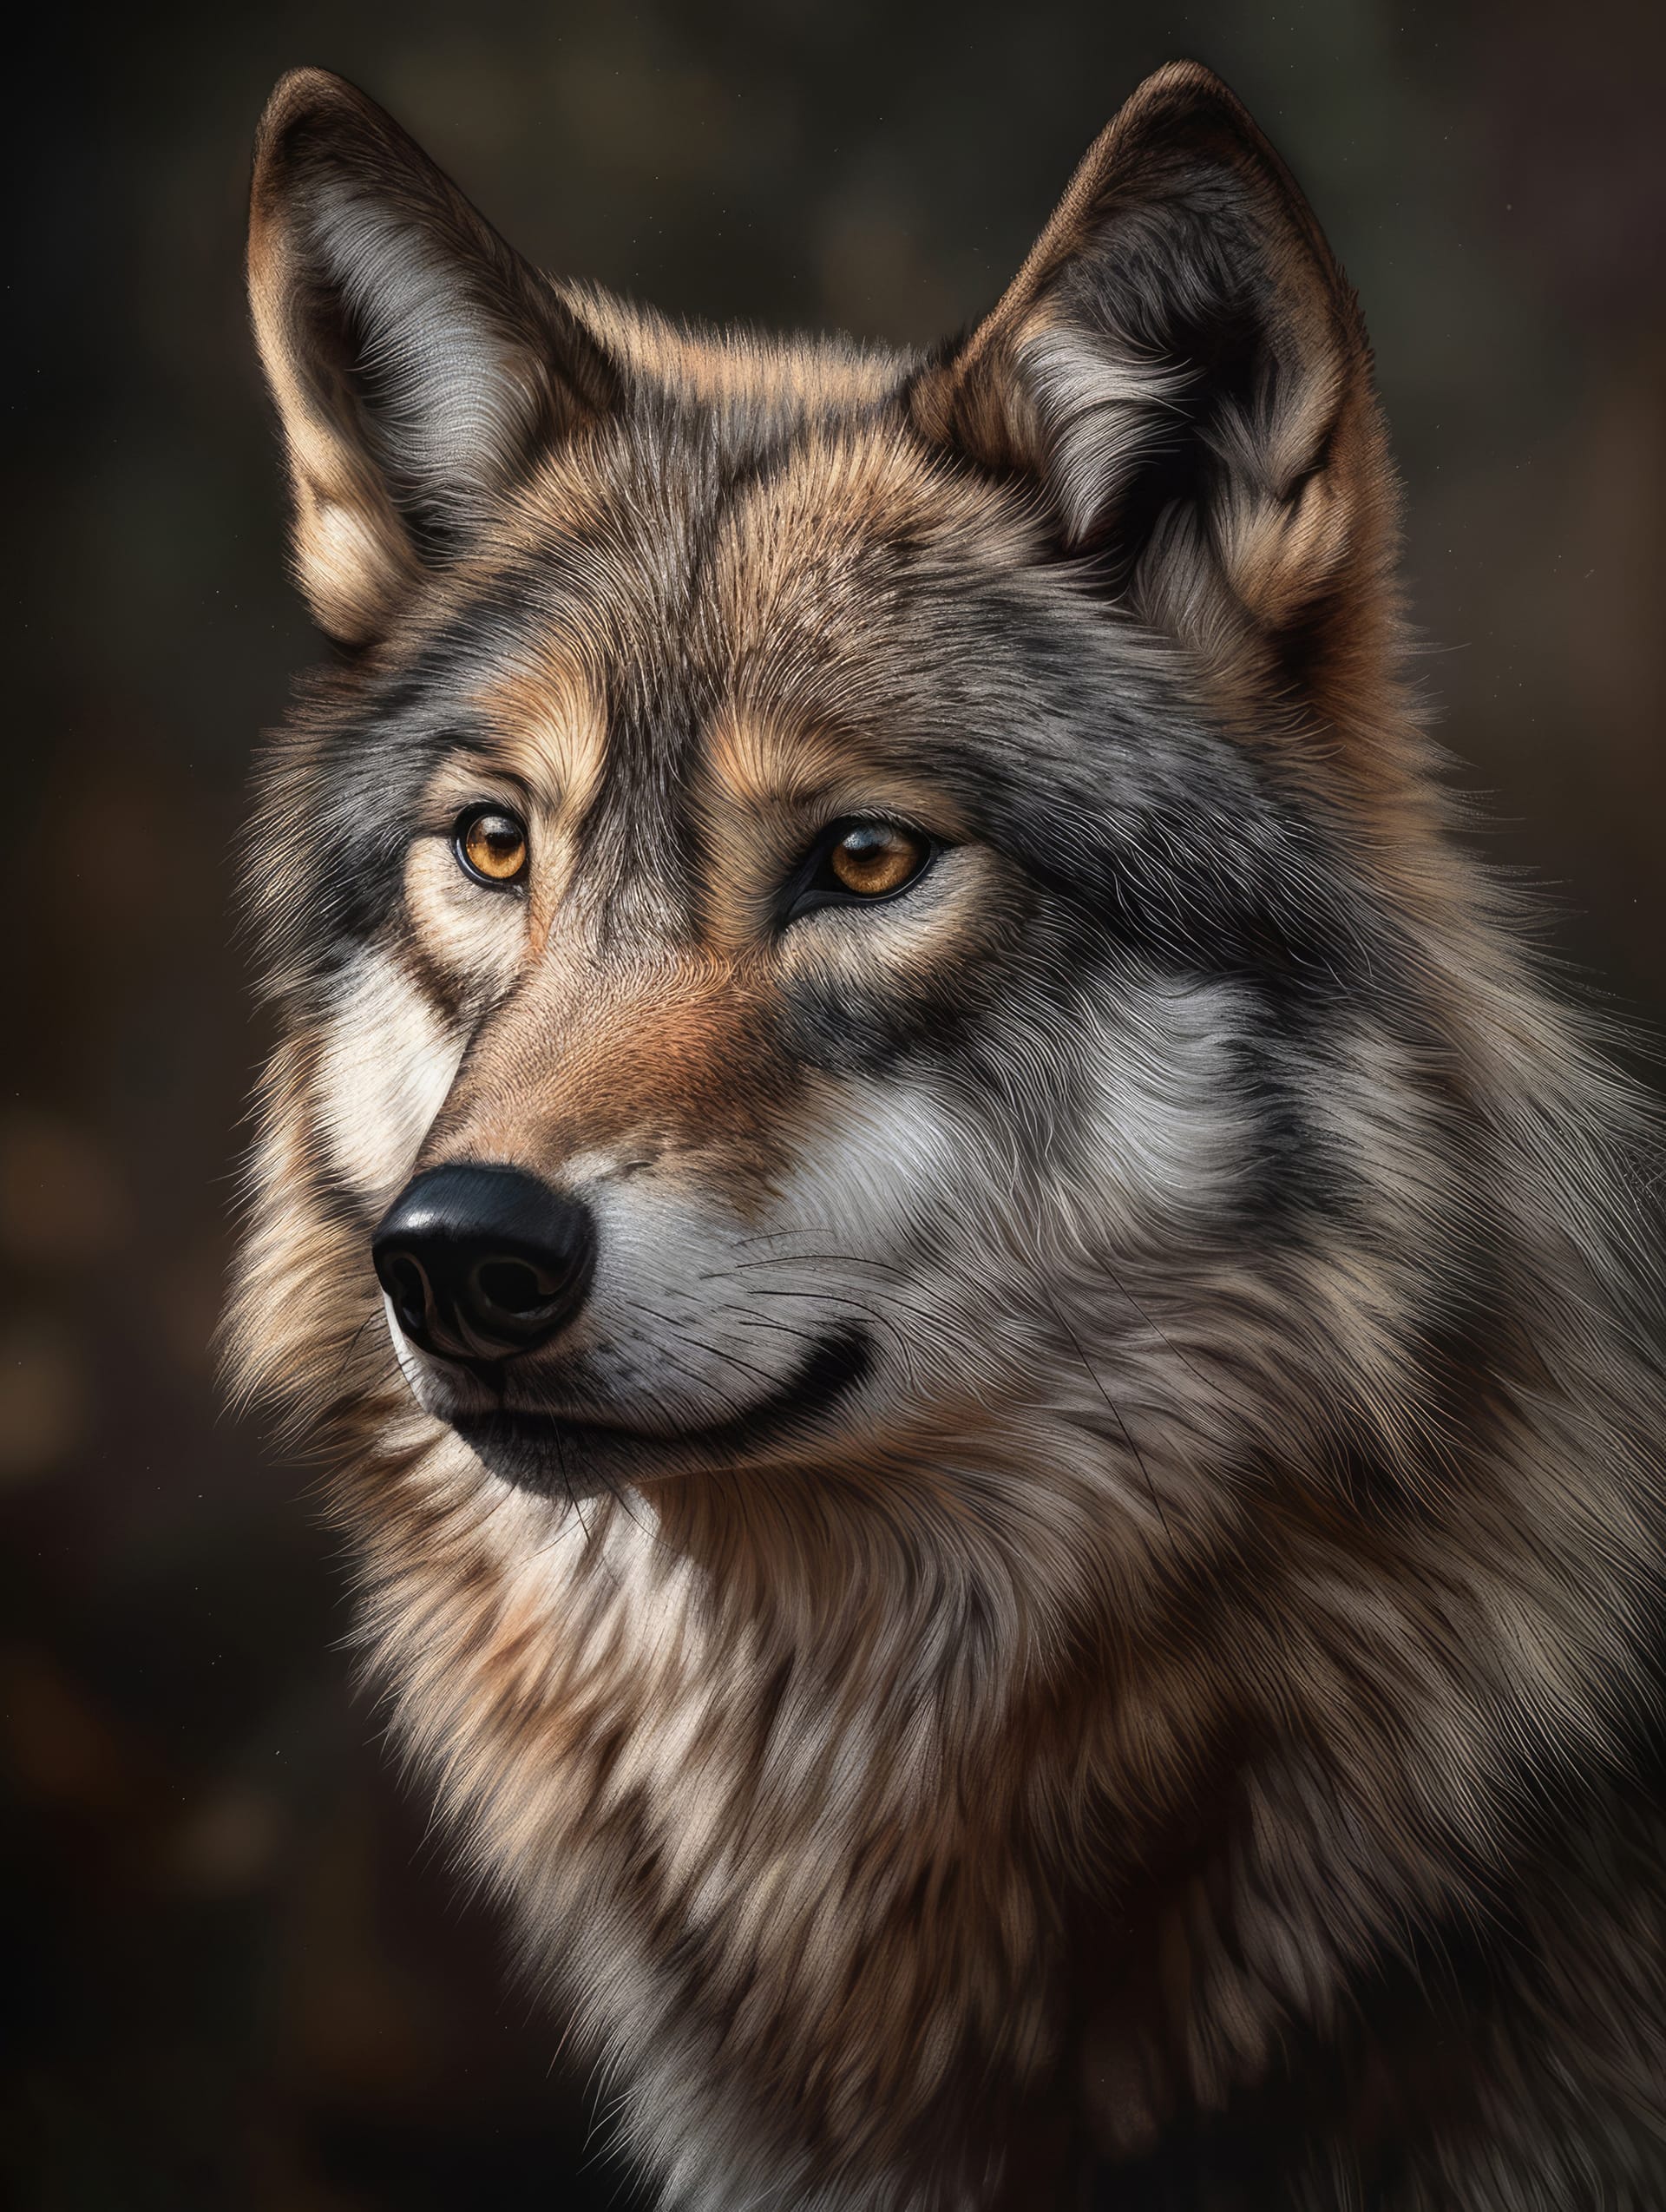 Wolf realistically photo portrait animal photo